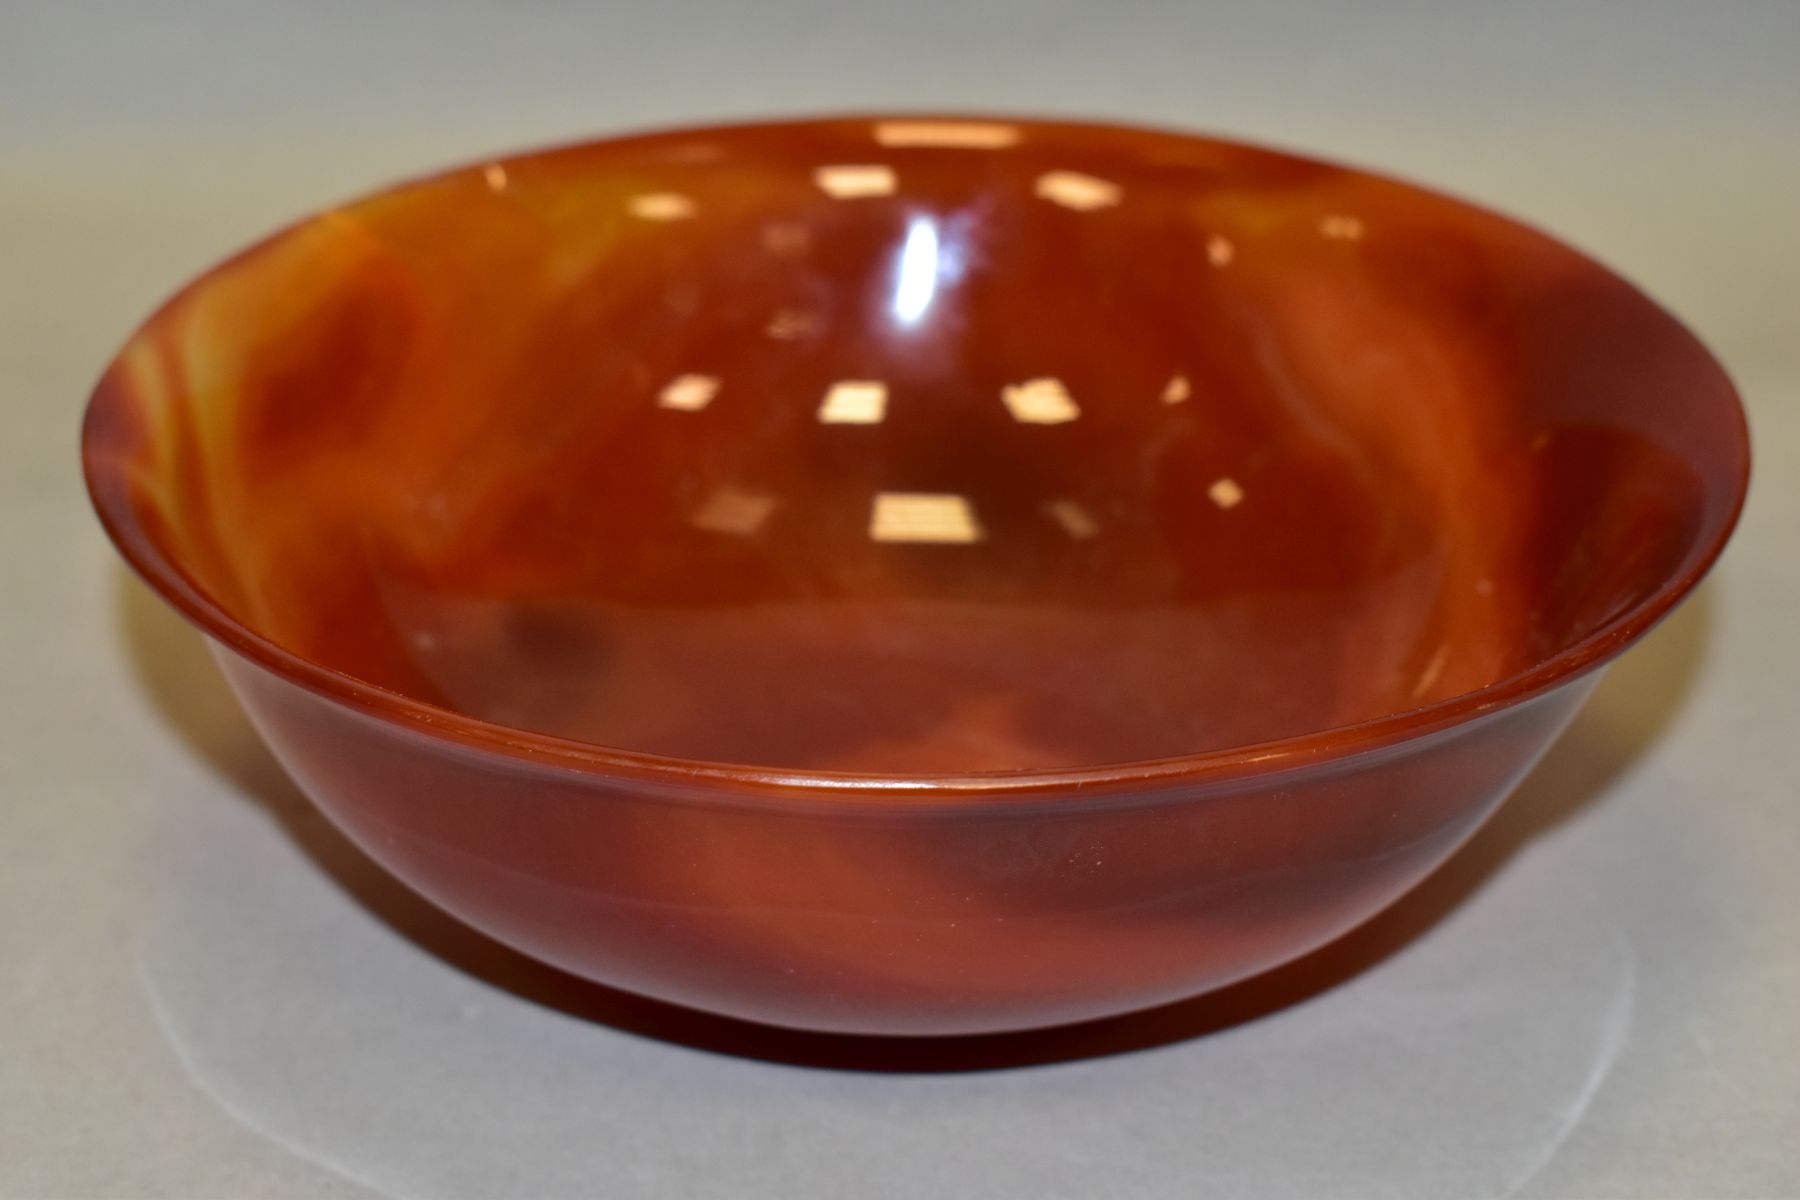 A CHINESE AGATE BOWL, semi translucent striated amber tones, short circular foot, diameter 18.8cm, - Image 9 of 9